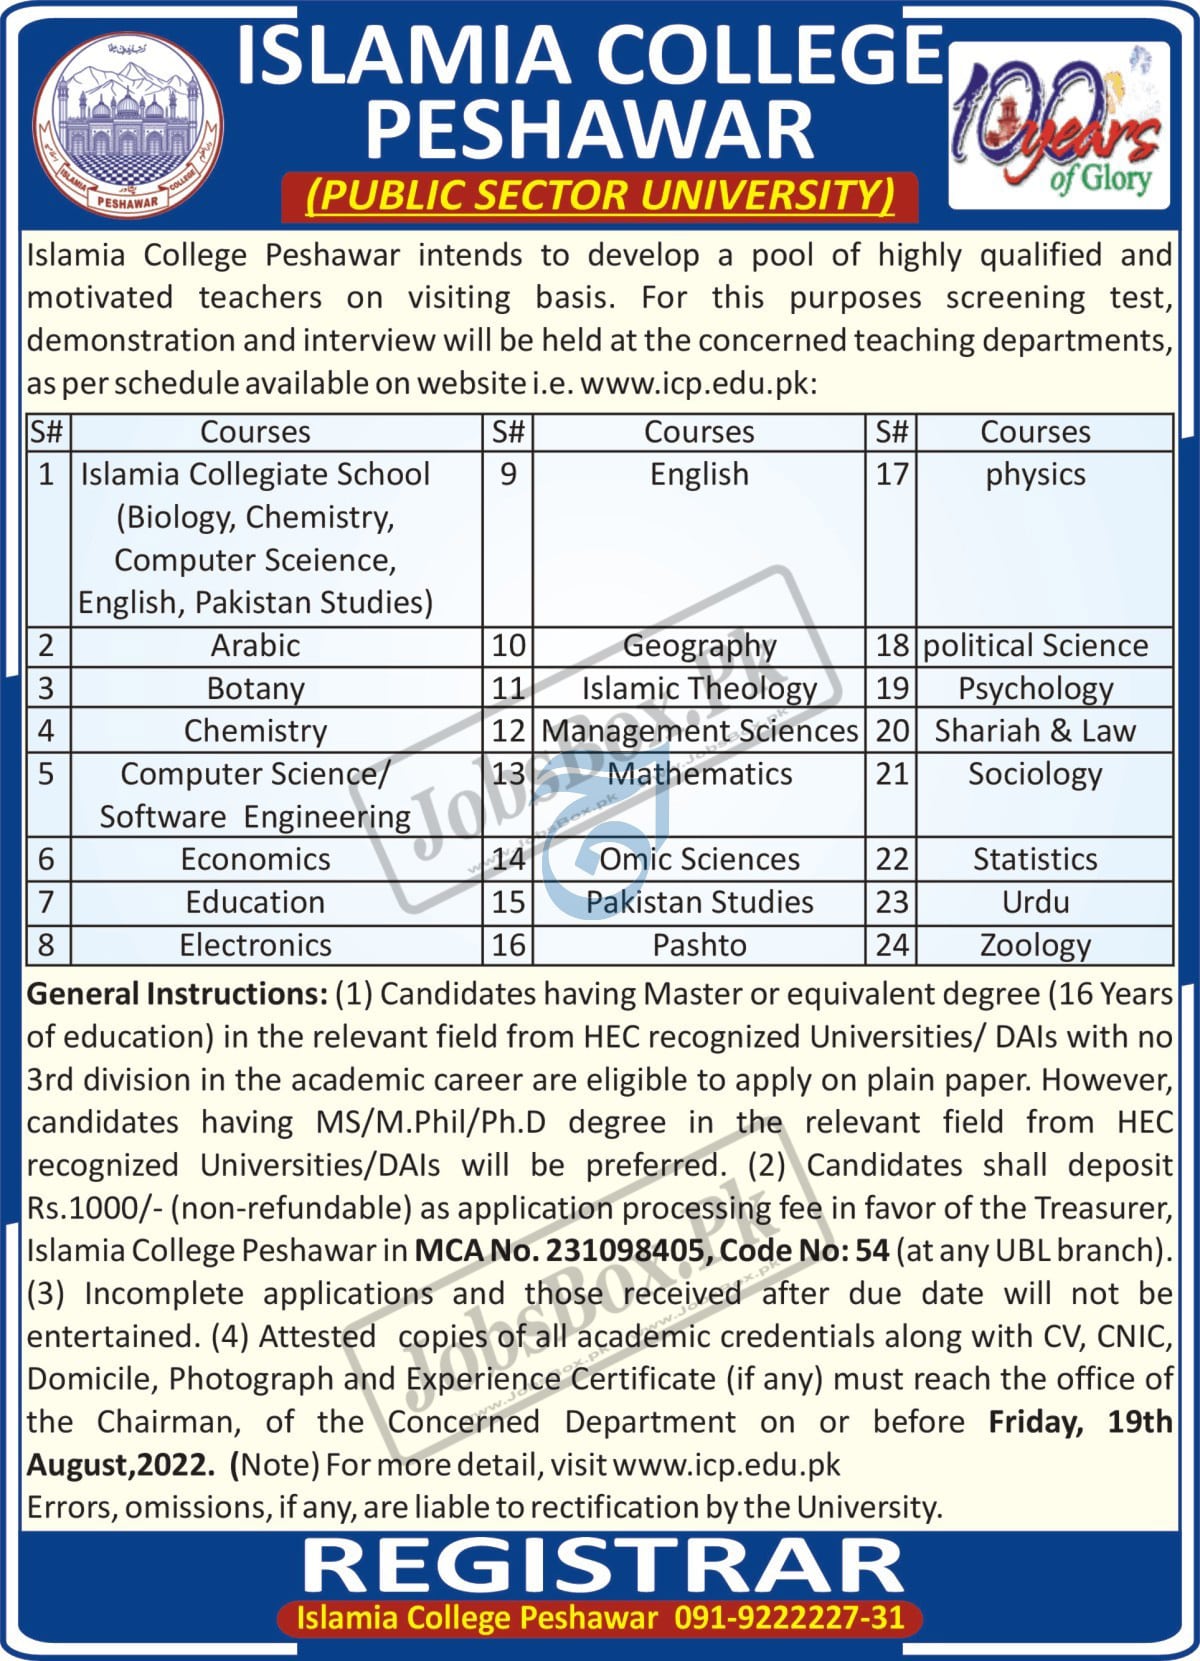 Islamic College Peshawar Jobs 2022 | www.icp.edu.pk